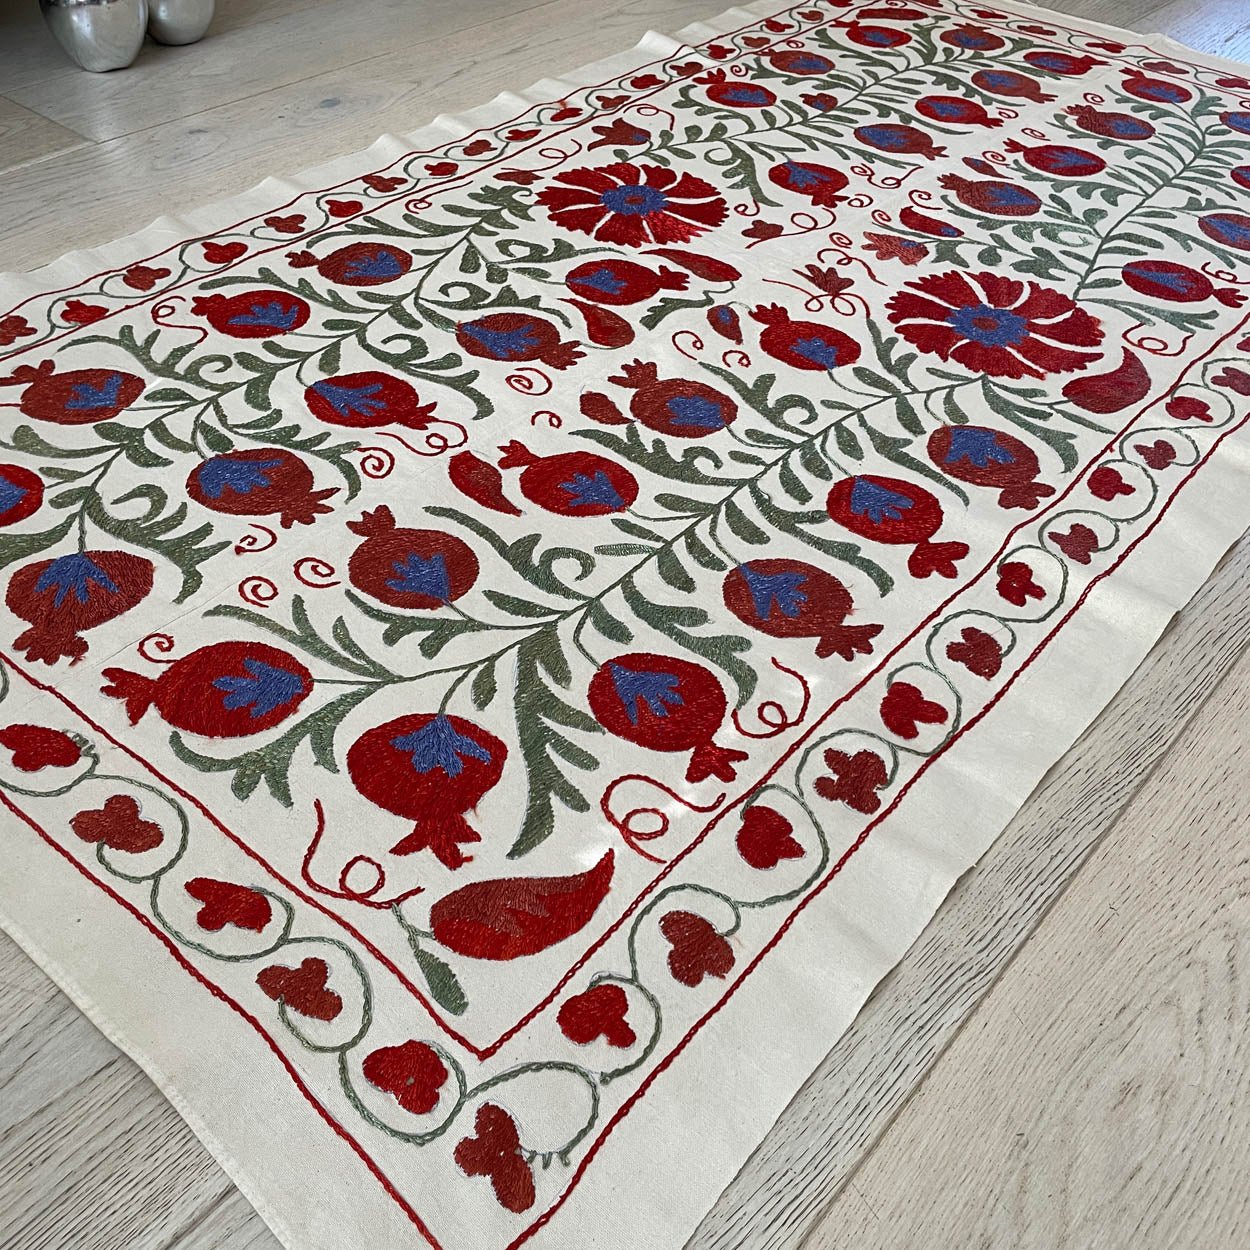 Uzbeki Suzani Hand Embroidered Textile Wall Hanging | Home Décor | Throw | 99cm x 180cm SUZ220518005 - Wildash London